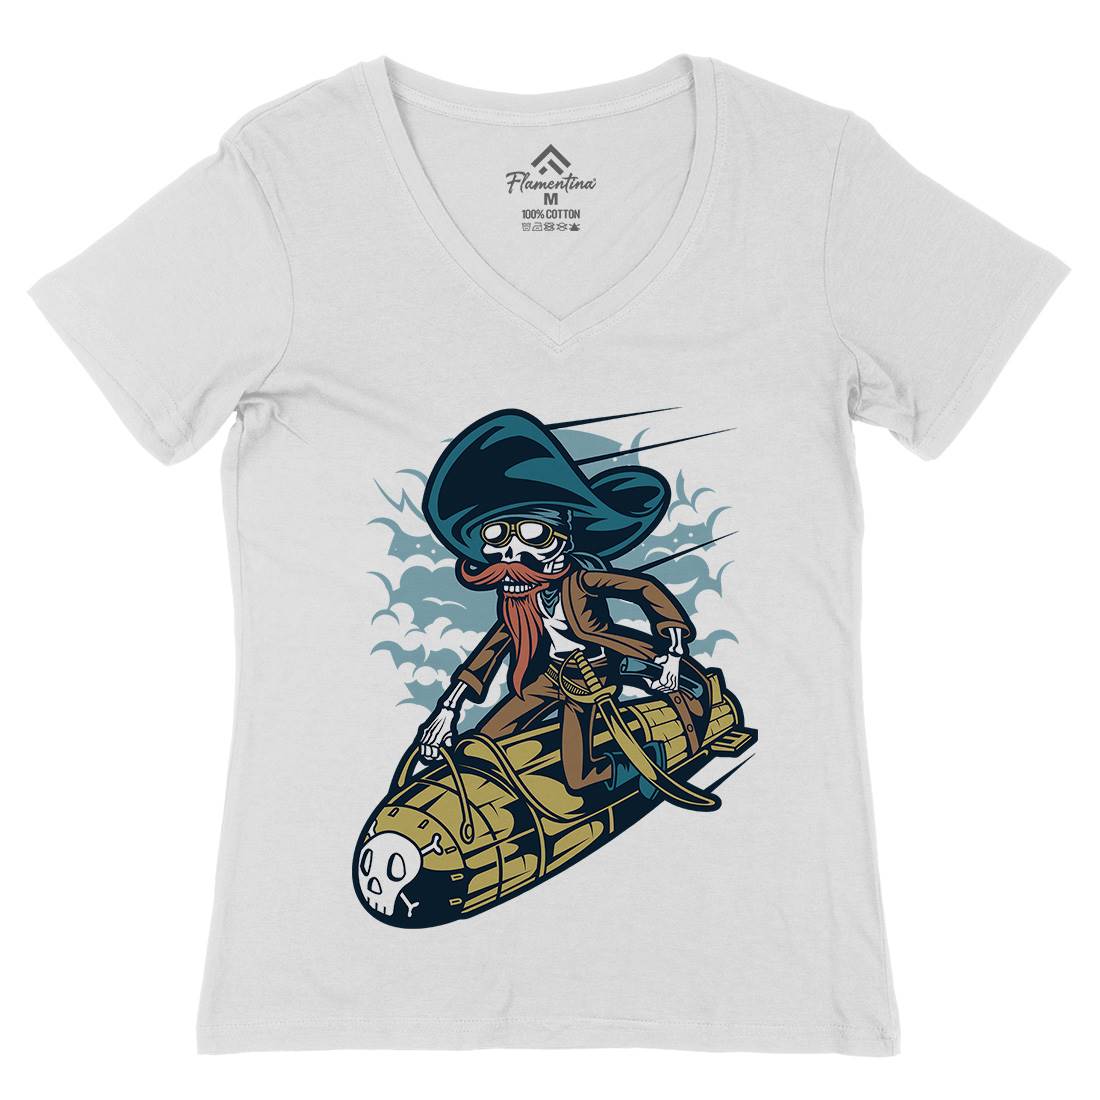 Rocket Rider Womens Organic V-Neck T-Shirt Army C428